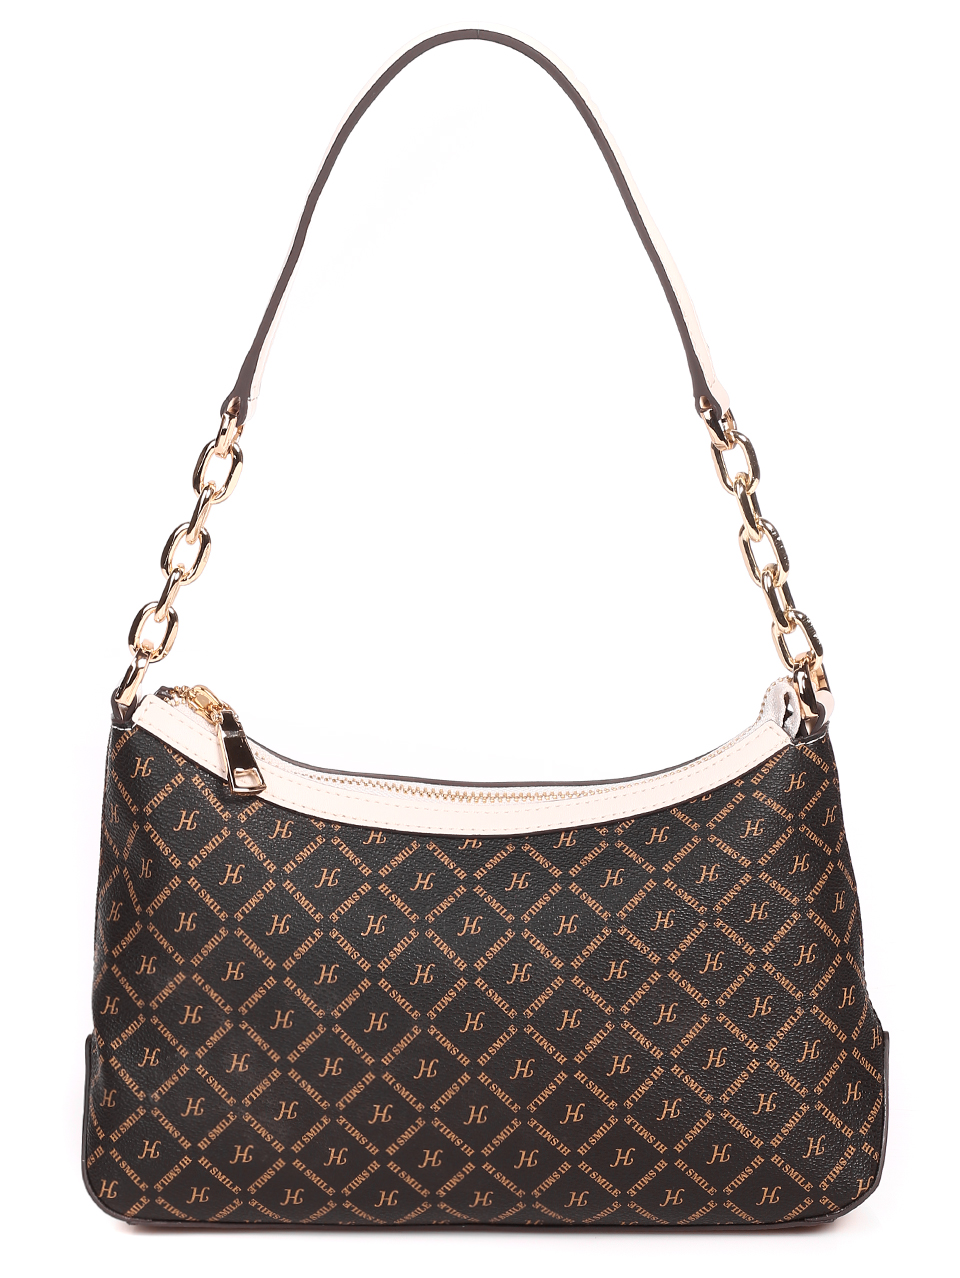 Ежедневна малка дамска чанта от естесвена кожа P20337 brown/white